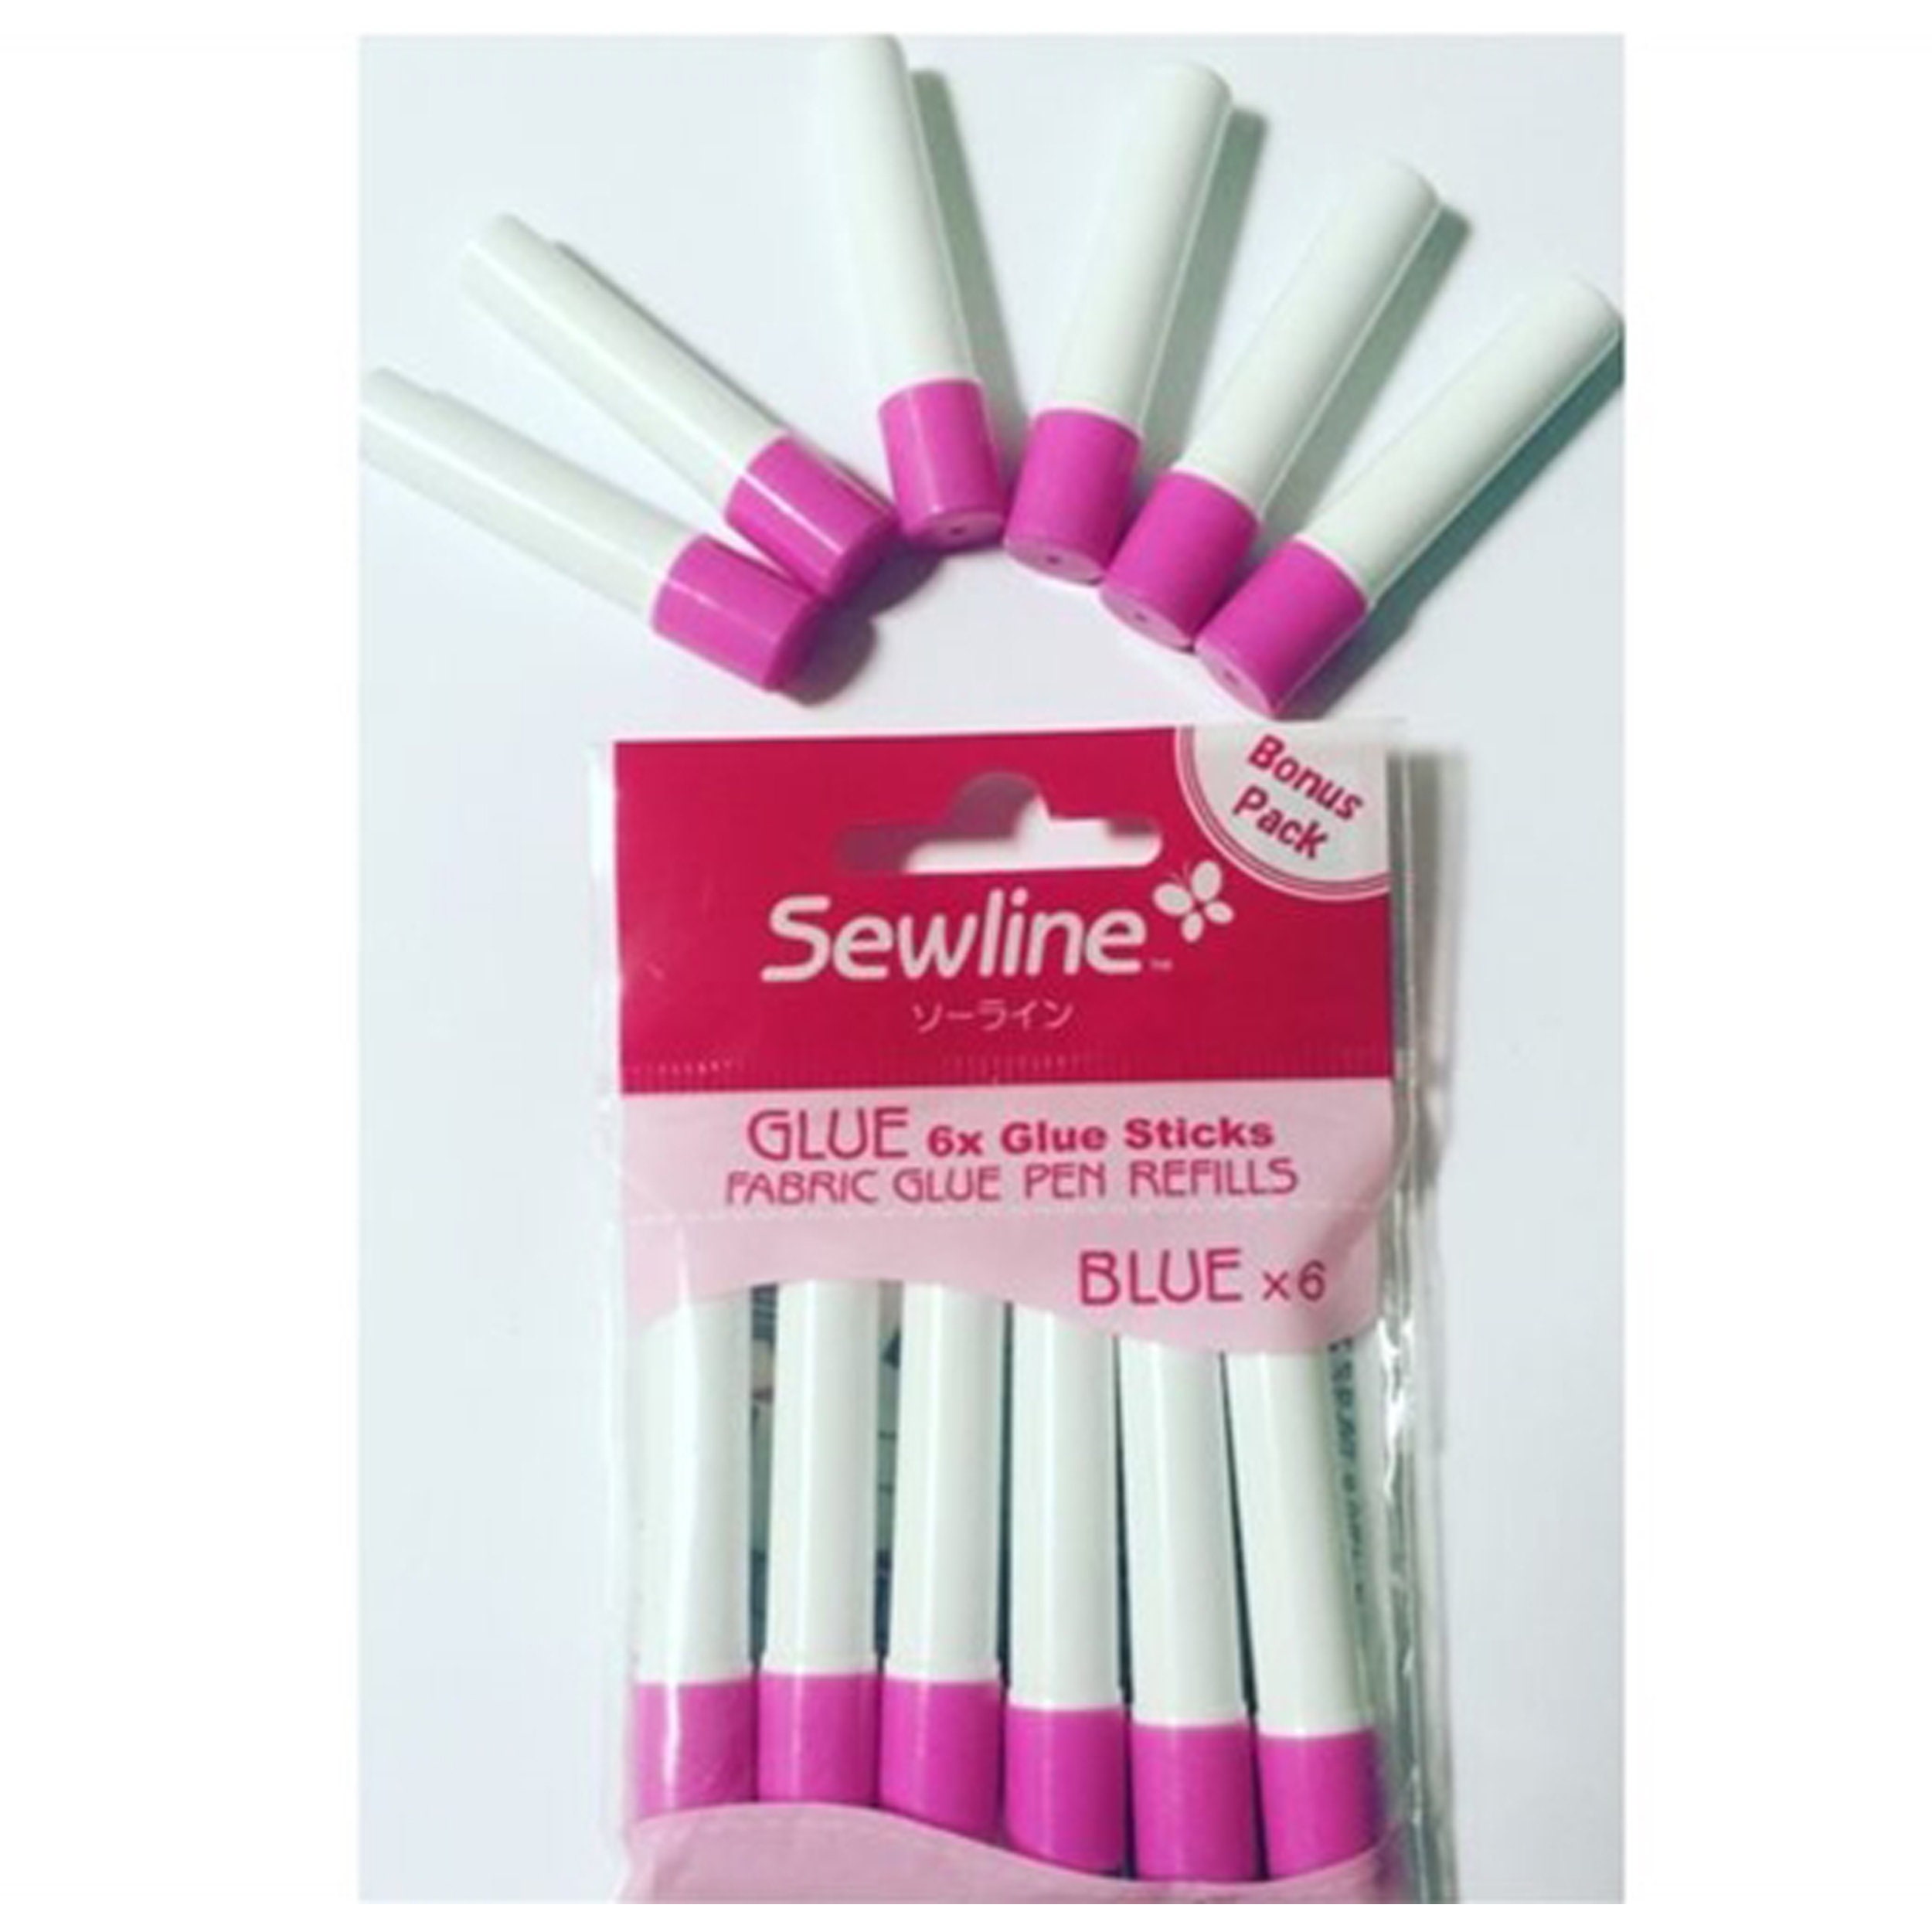 Sewline Water-Soluble Fabric Glue Pen W/Refill-Blue